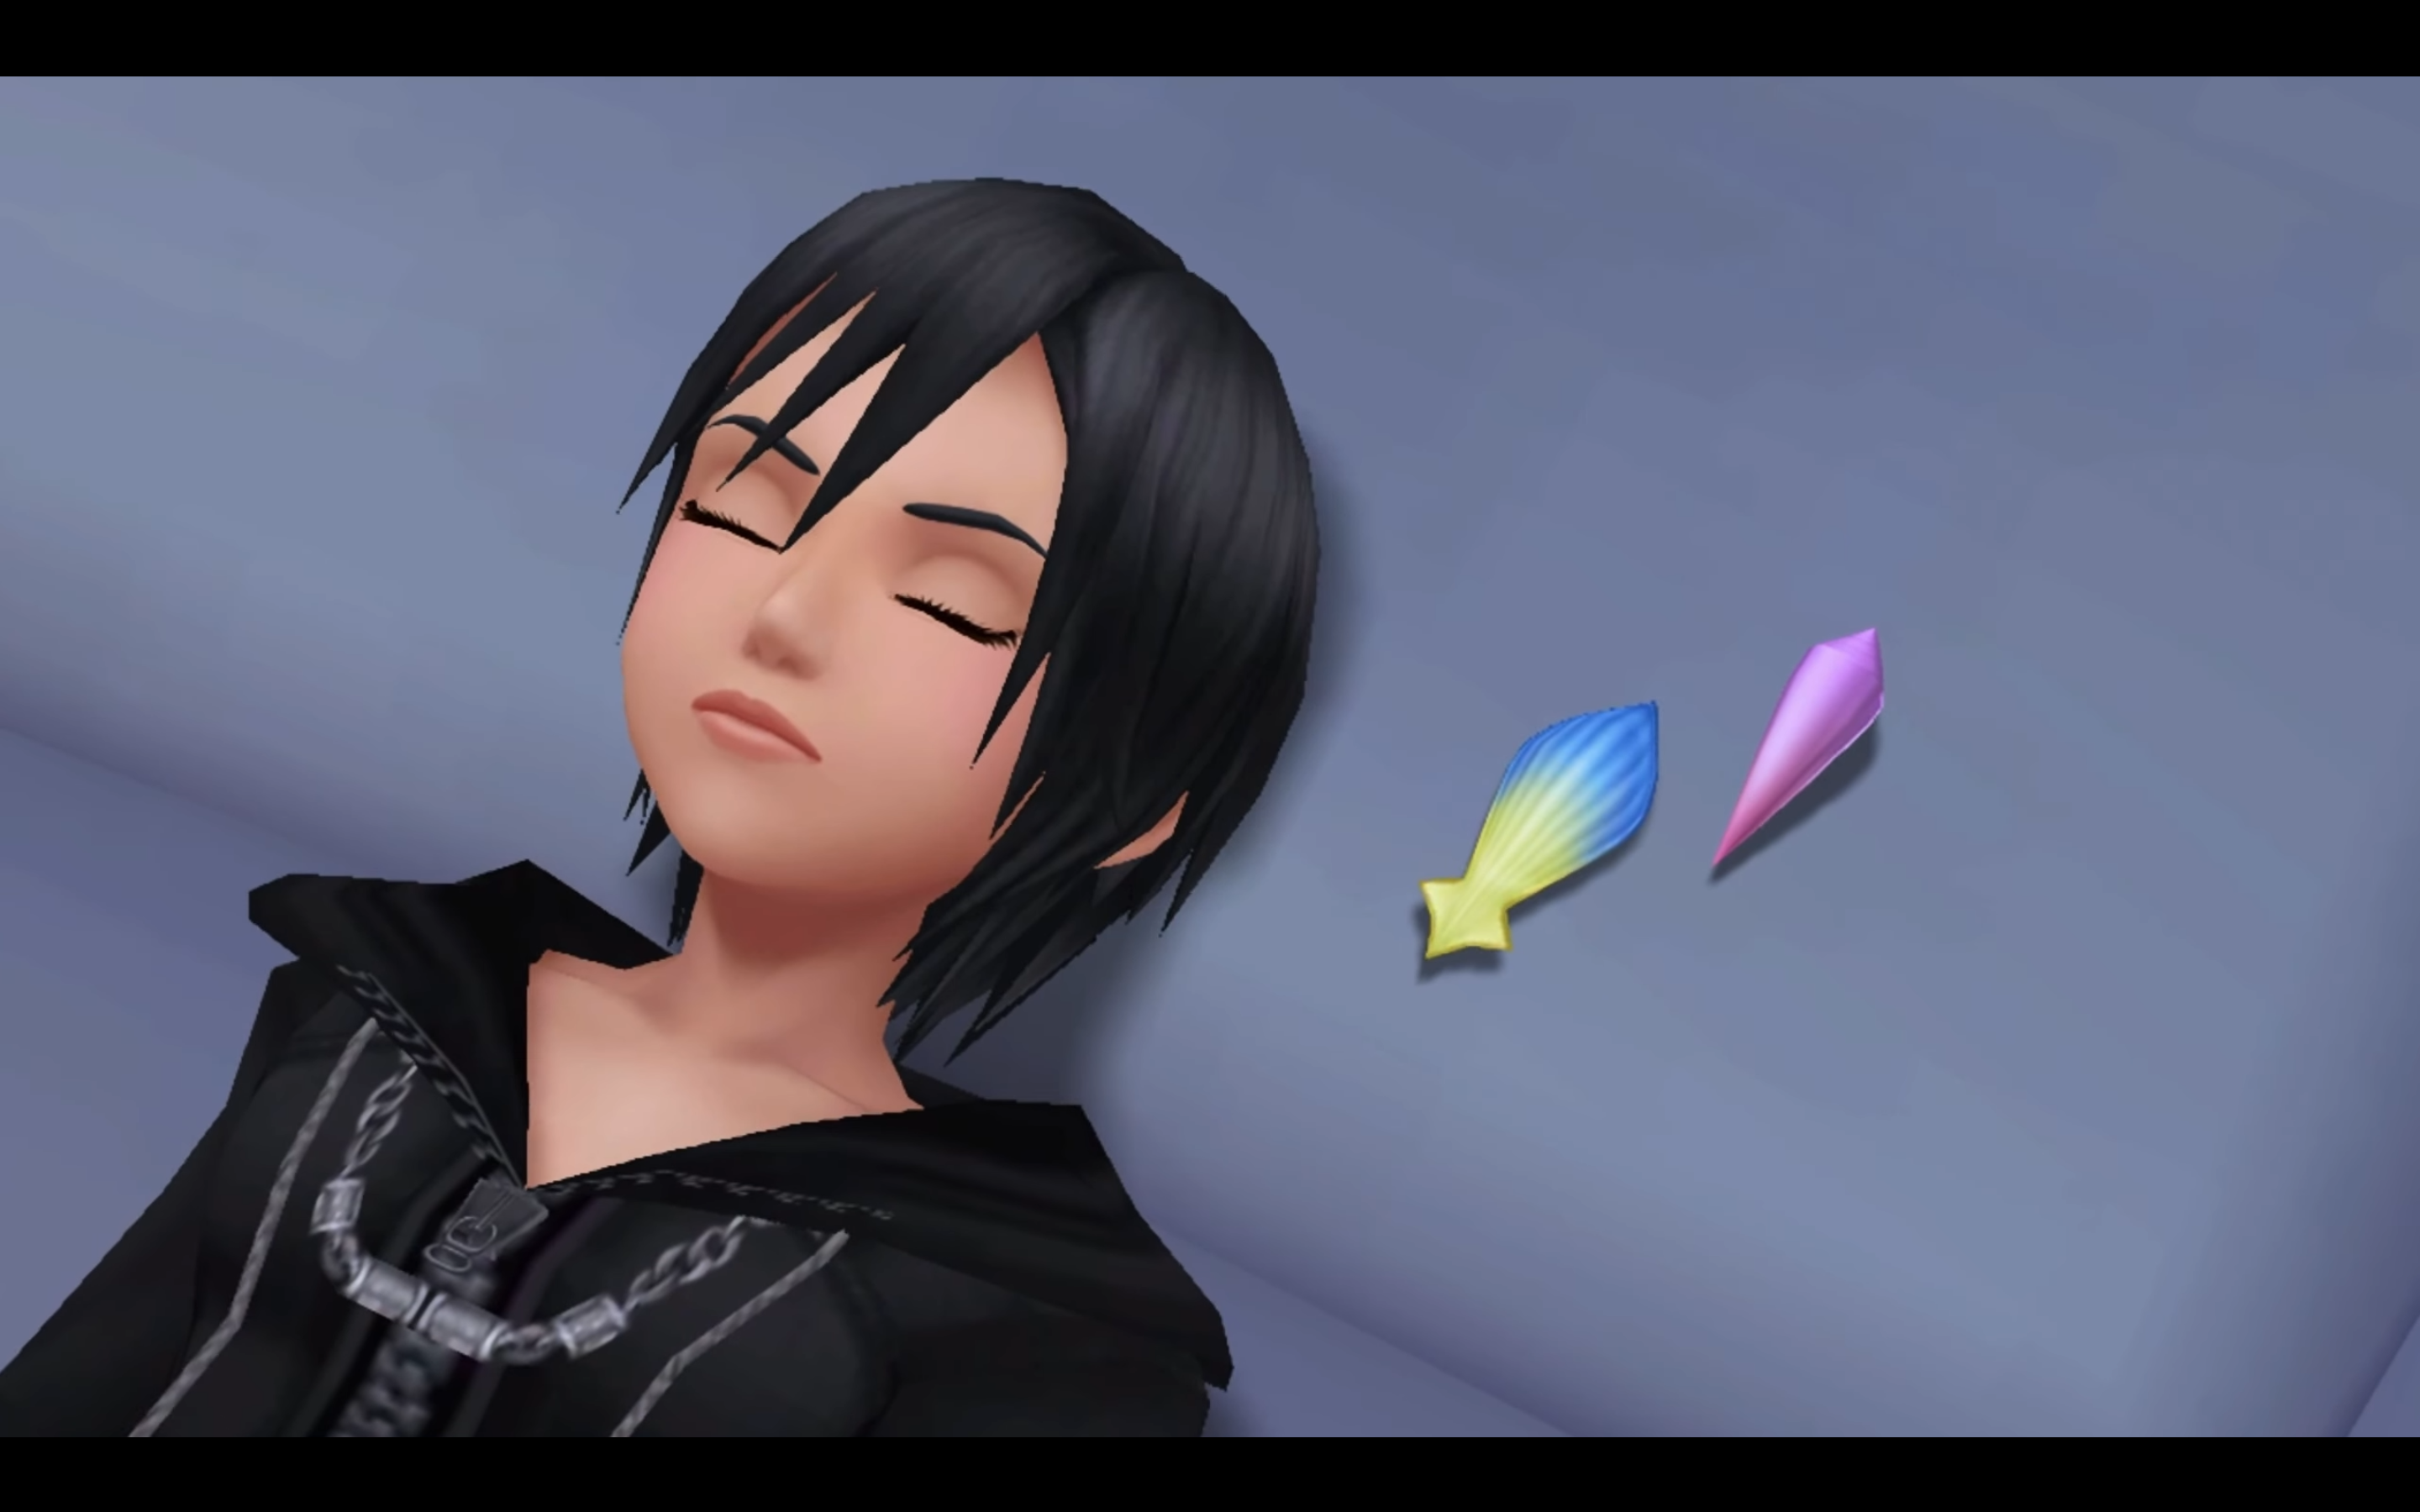 "Kingdom Hearts: 358/2 Days". 2009. Square Enix.
Xion sleeping.